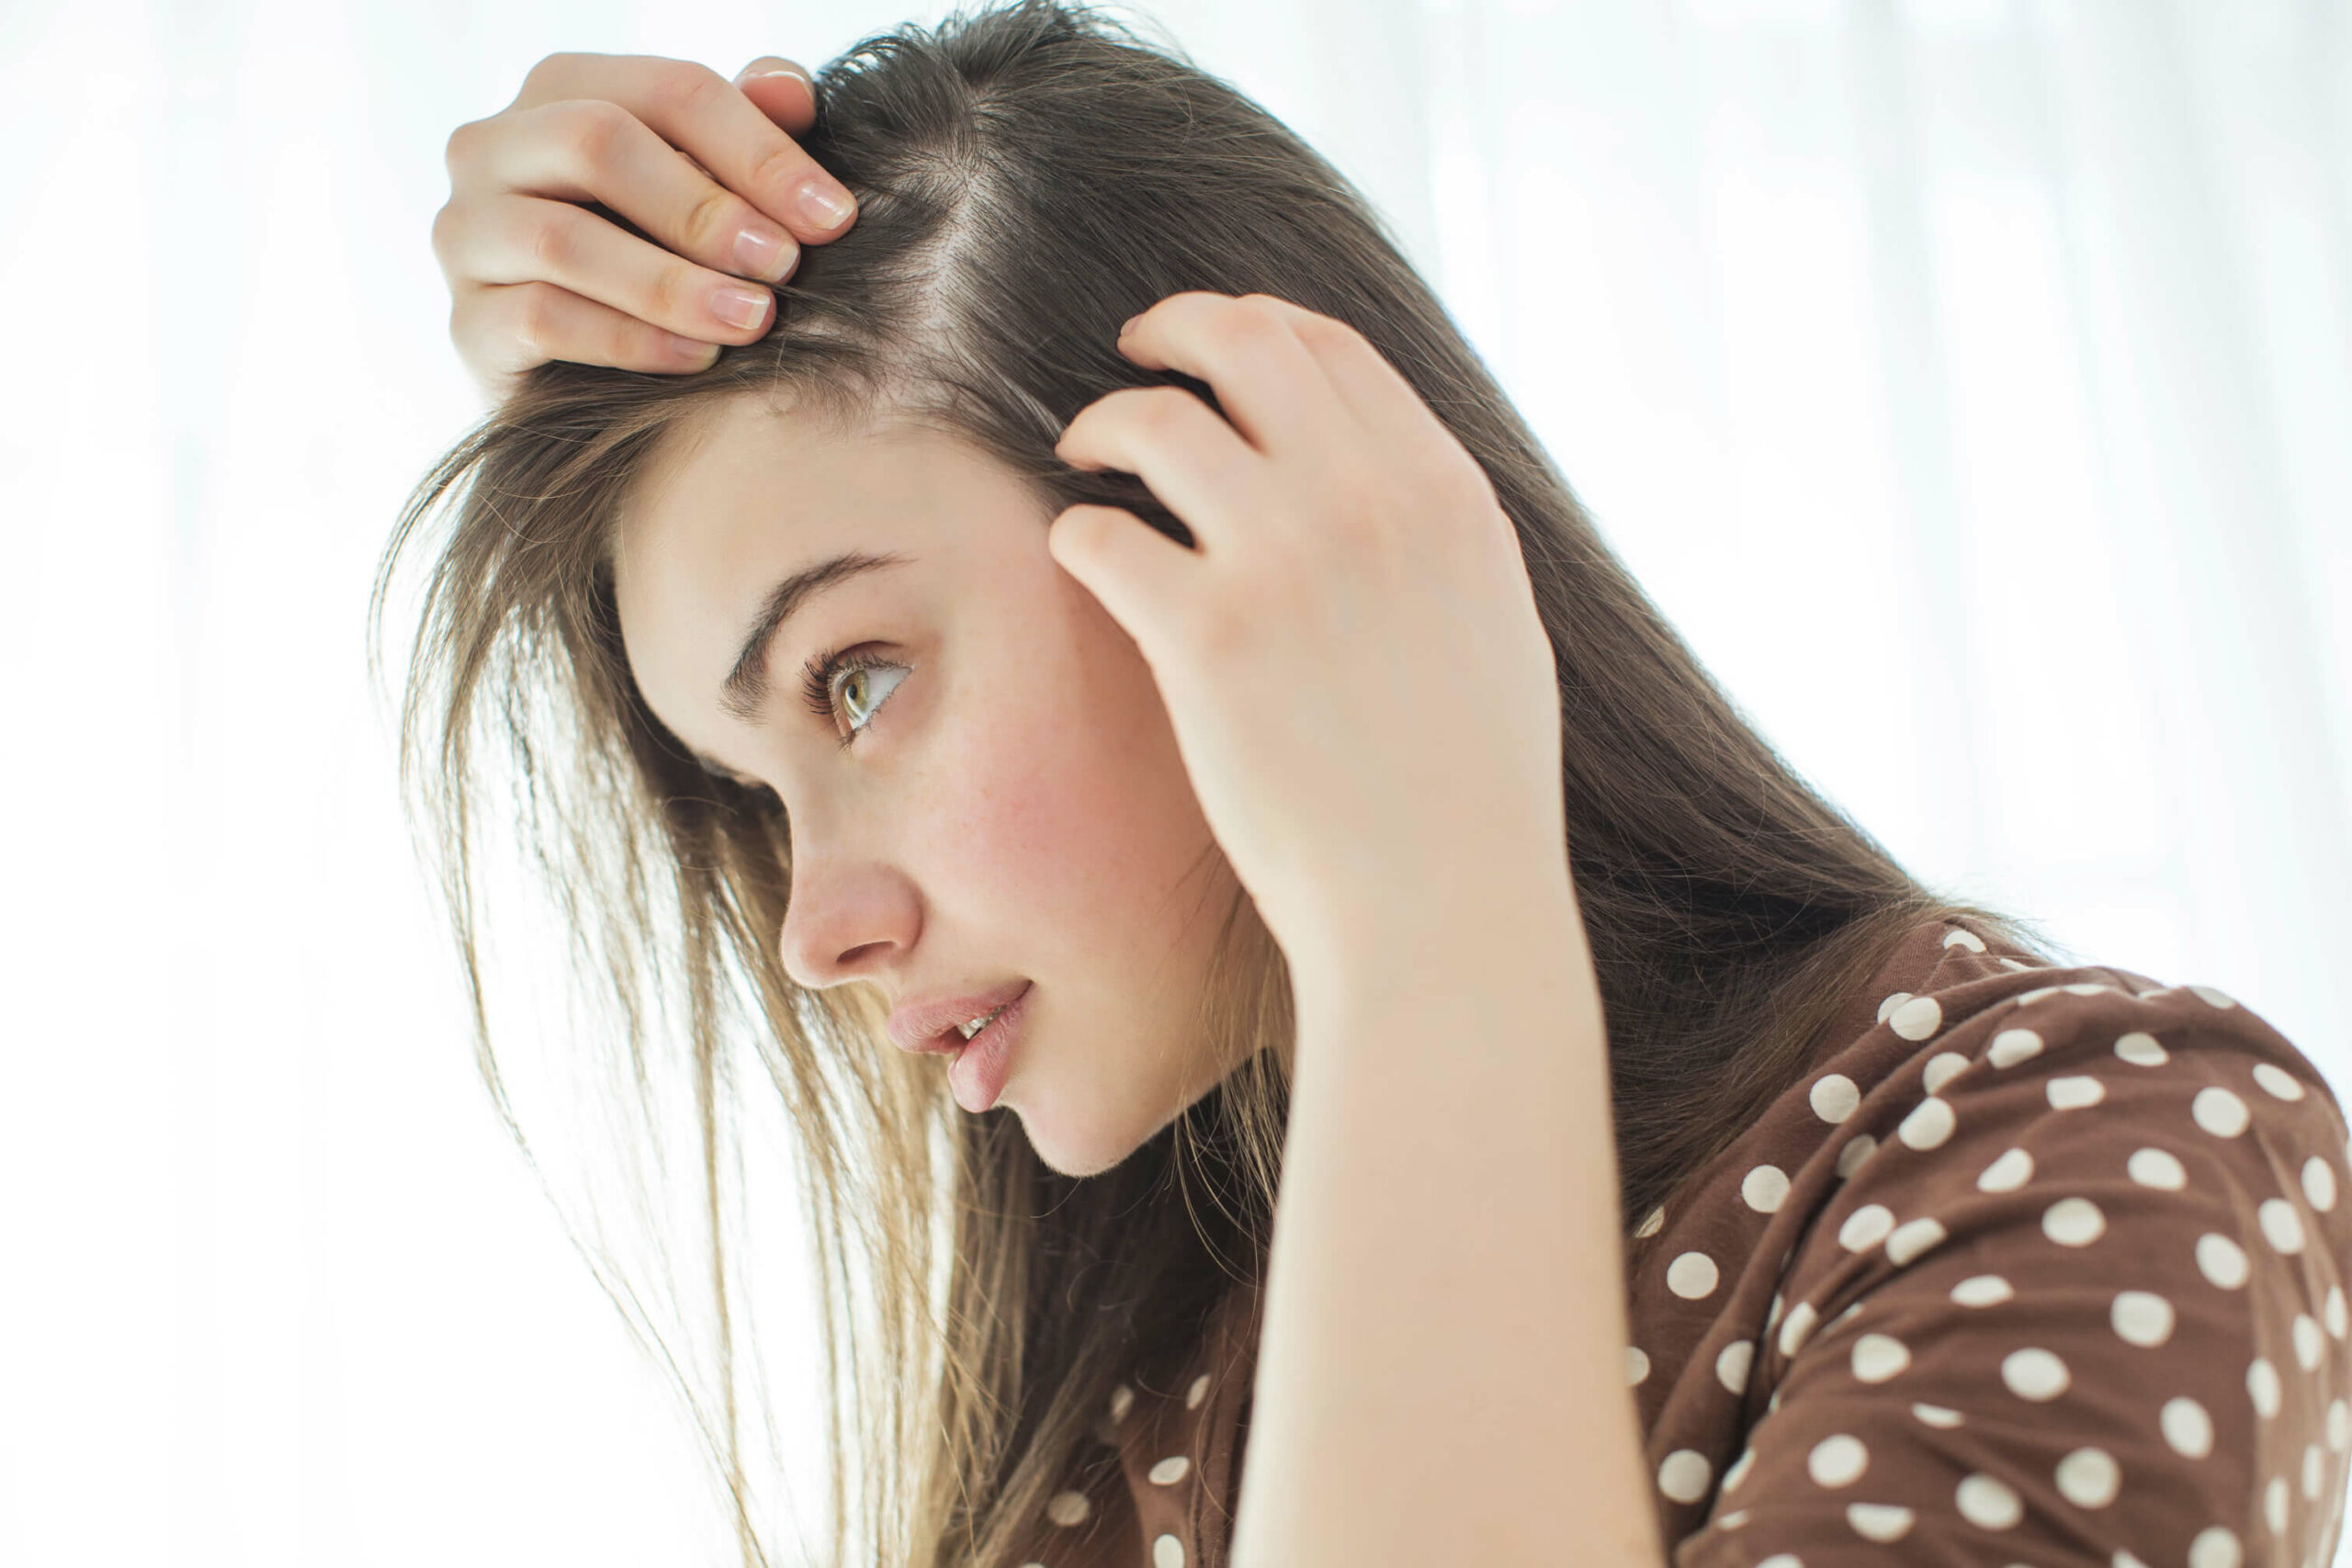 COMMON ERRORS WOMEN MAKE THAT COULD WORSEN THINNING HAIR